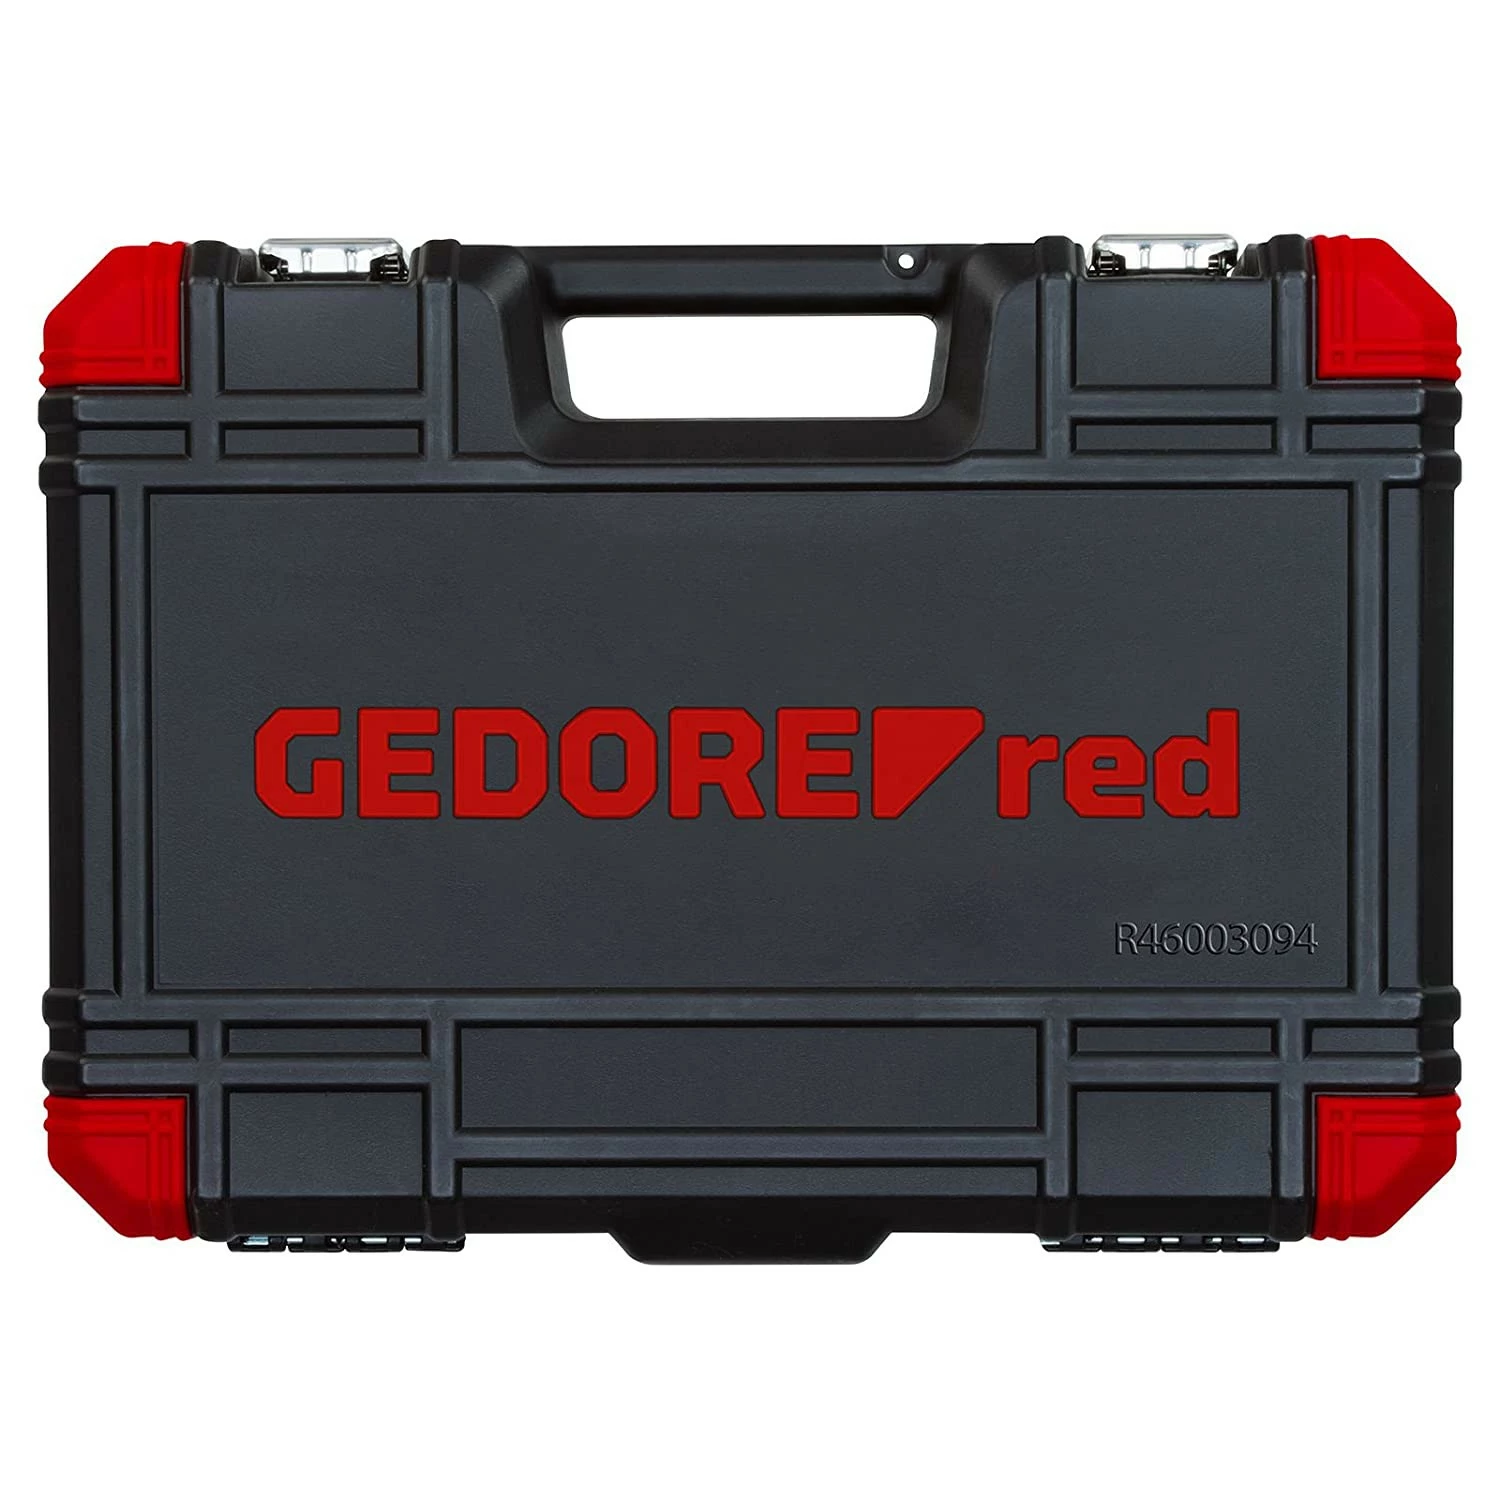 Gedore RED R46003094 94-delige Dopsleutel-/gereedschapset - 1/4" en 1/2"-image